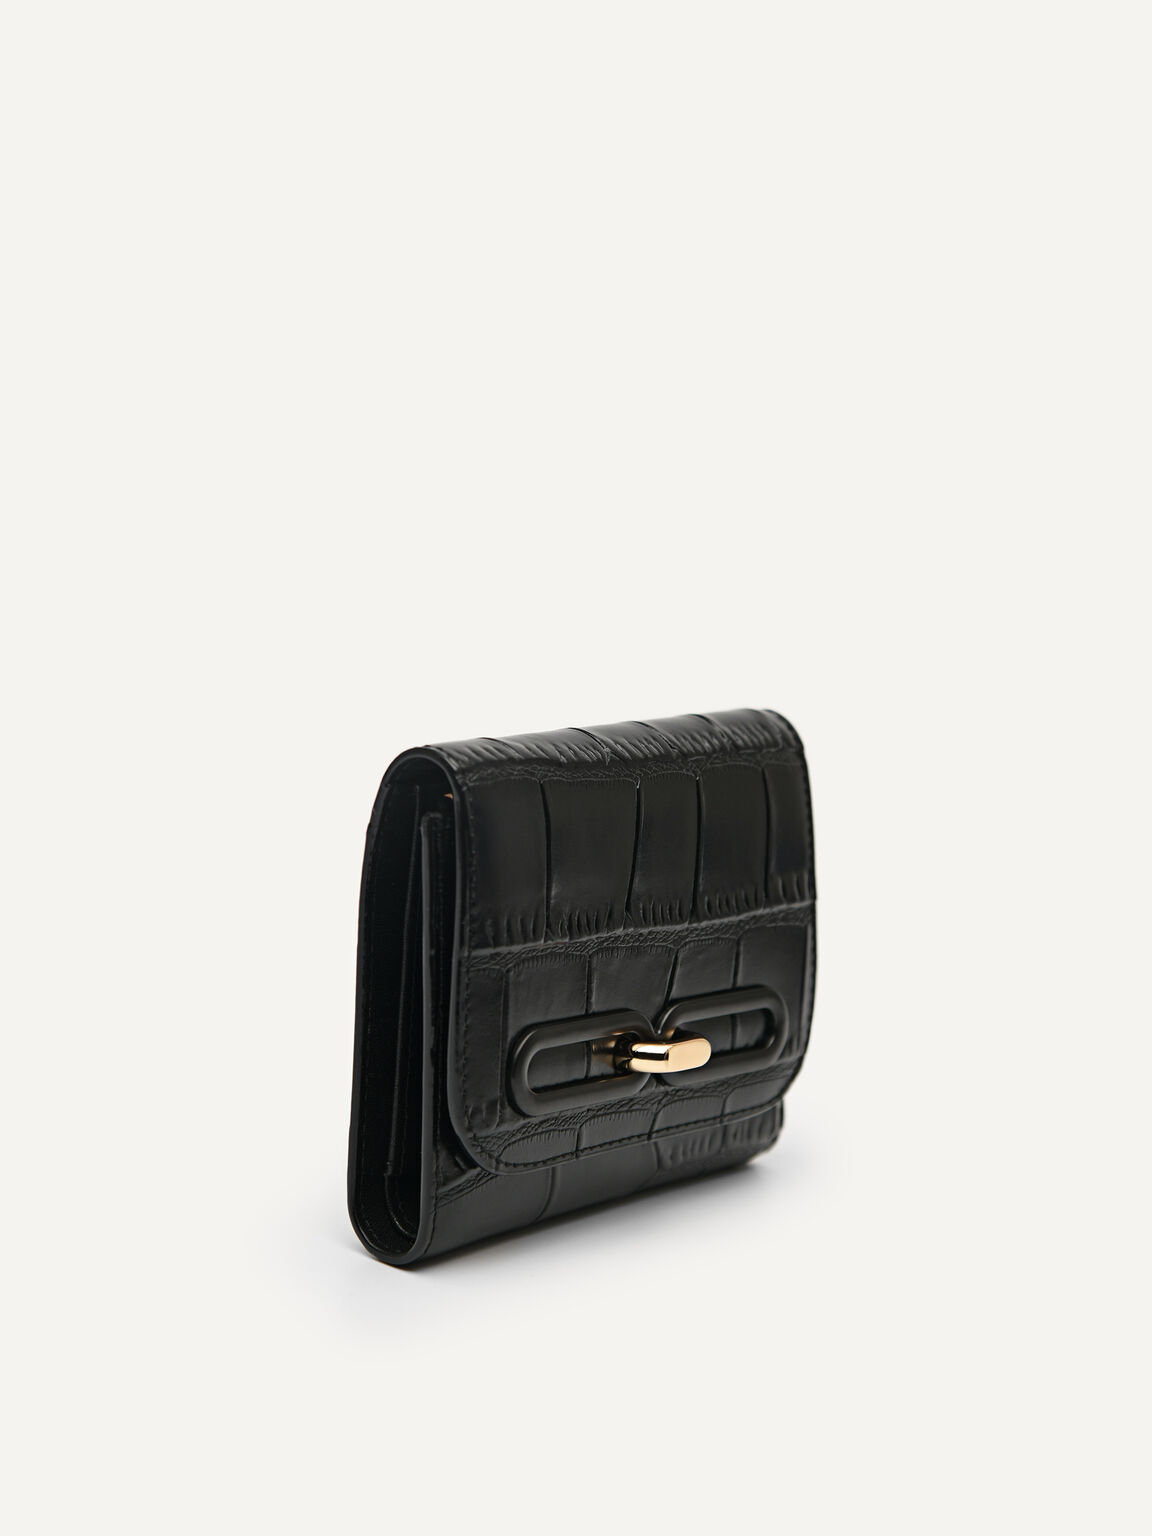 PEDRO Studio Leather Tri-Fold Wallet, Black, hi-res